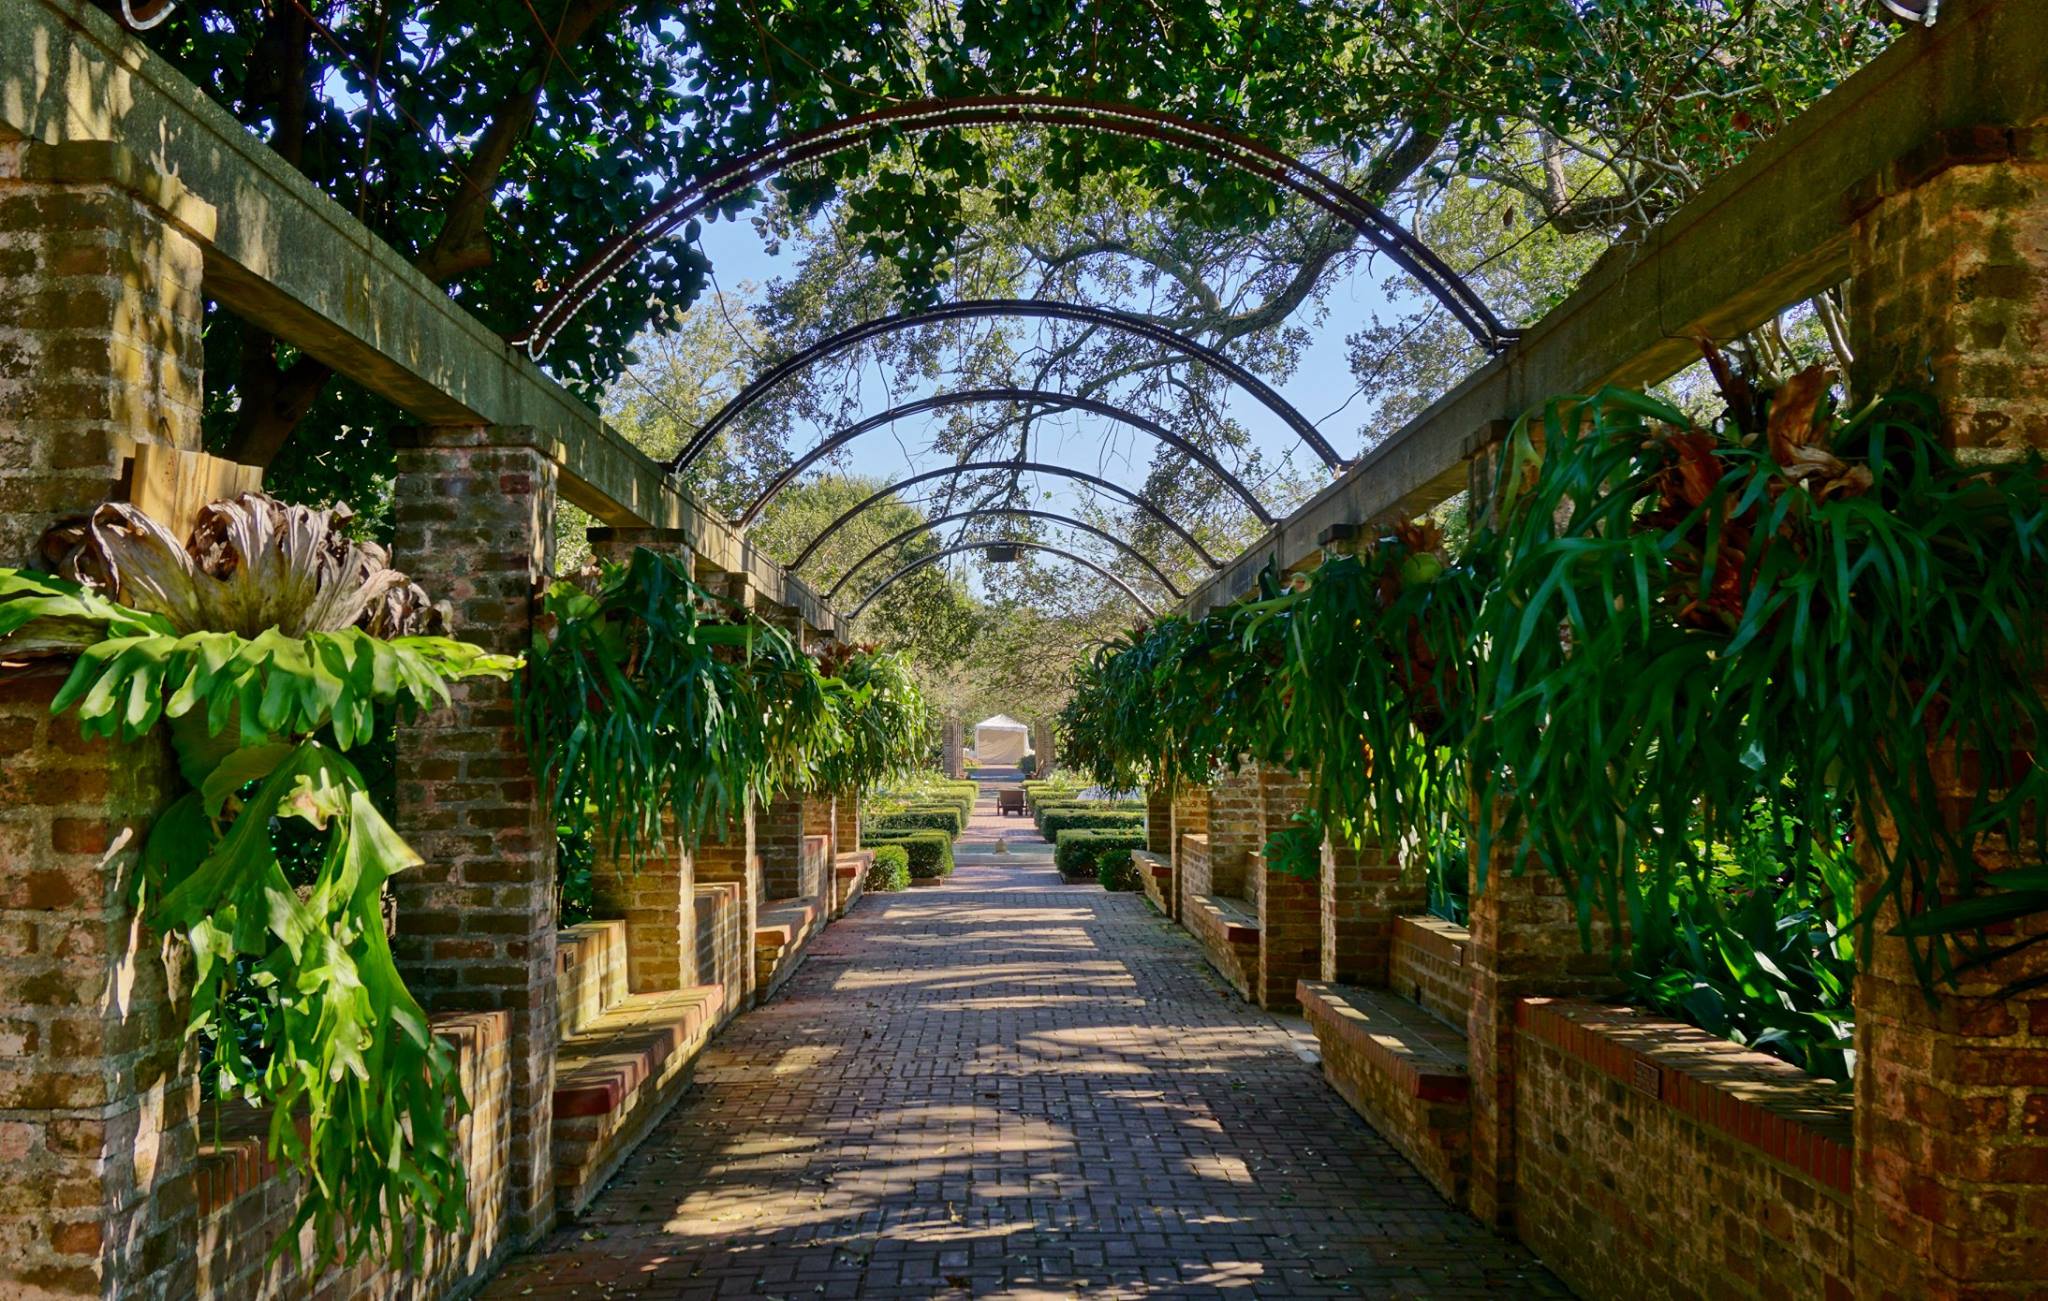 City Park Botanical Gardens In New Orleans Looks Like Narnia